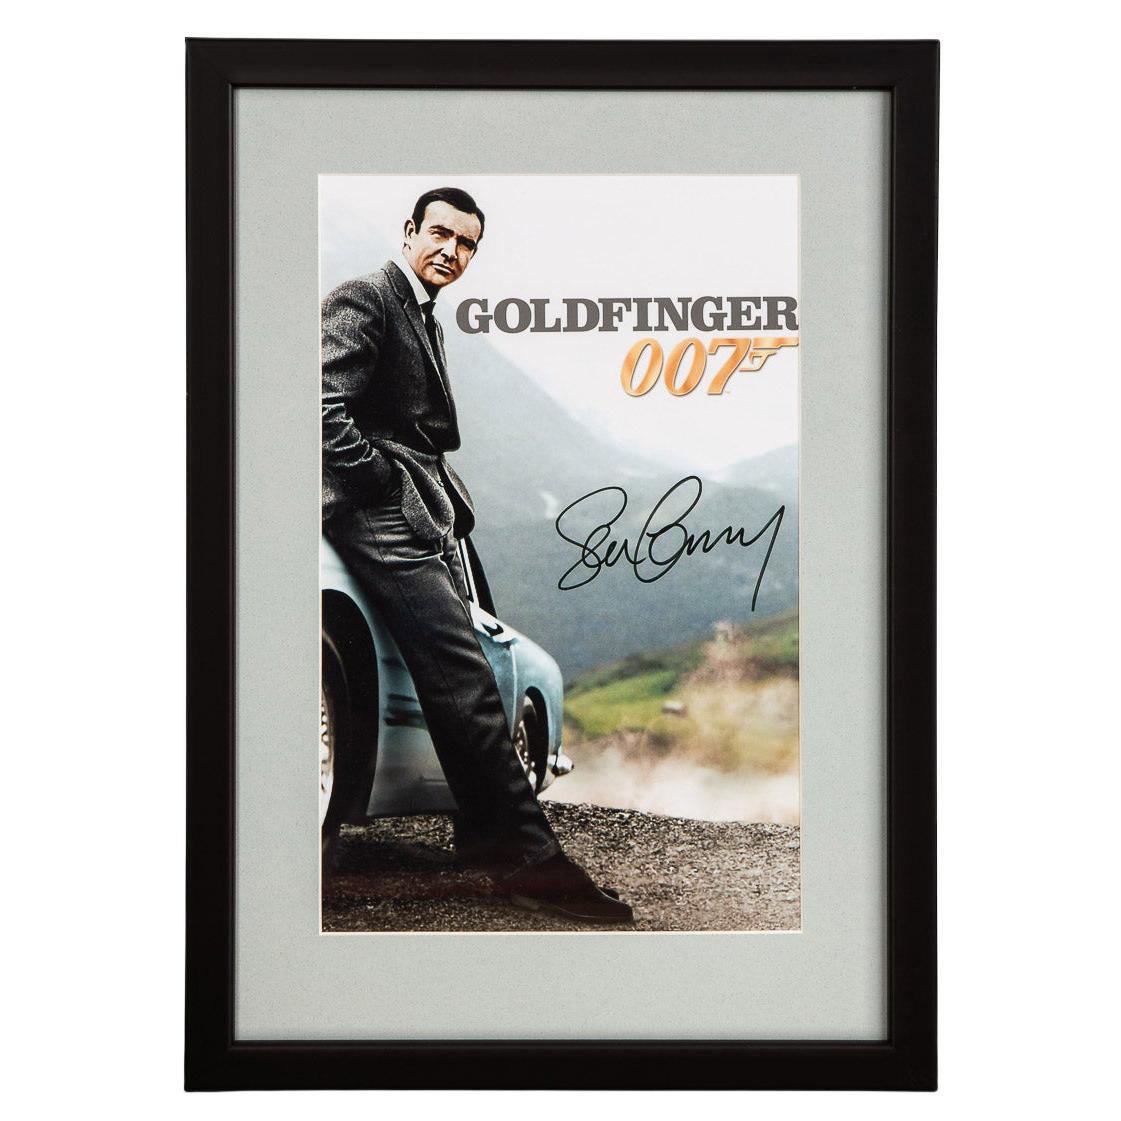 James Bond 007 Sean Connery Aston Martin Db5 Gerahmte Fotografie mit Signatur im Angebot